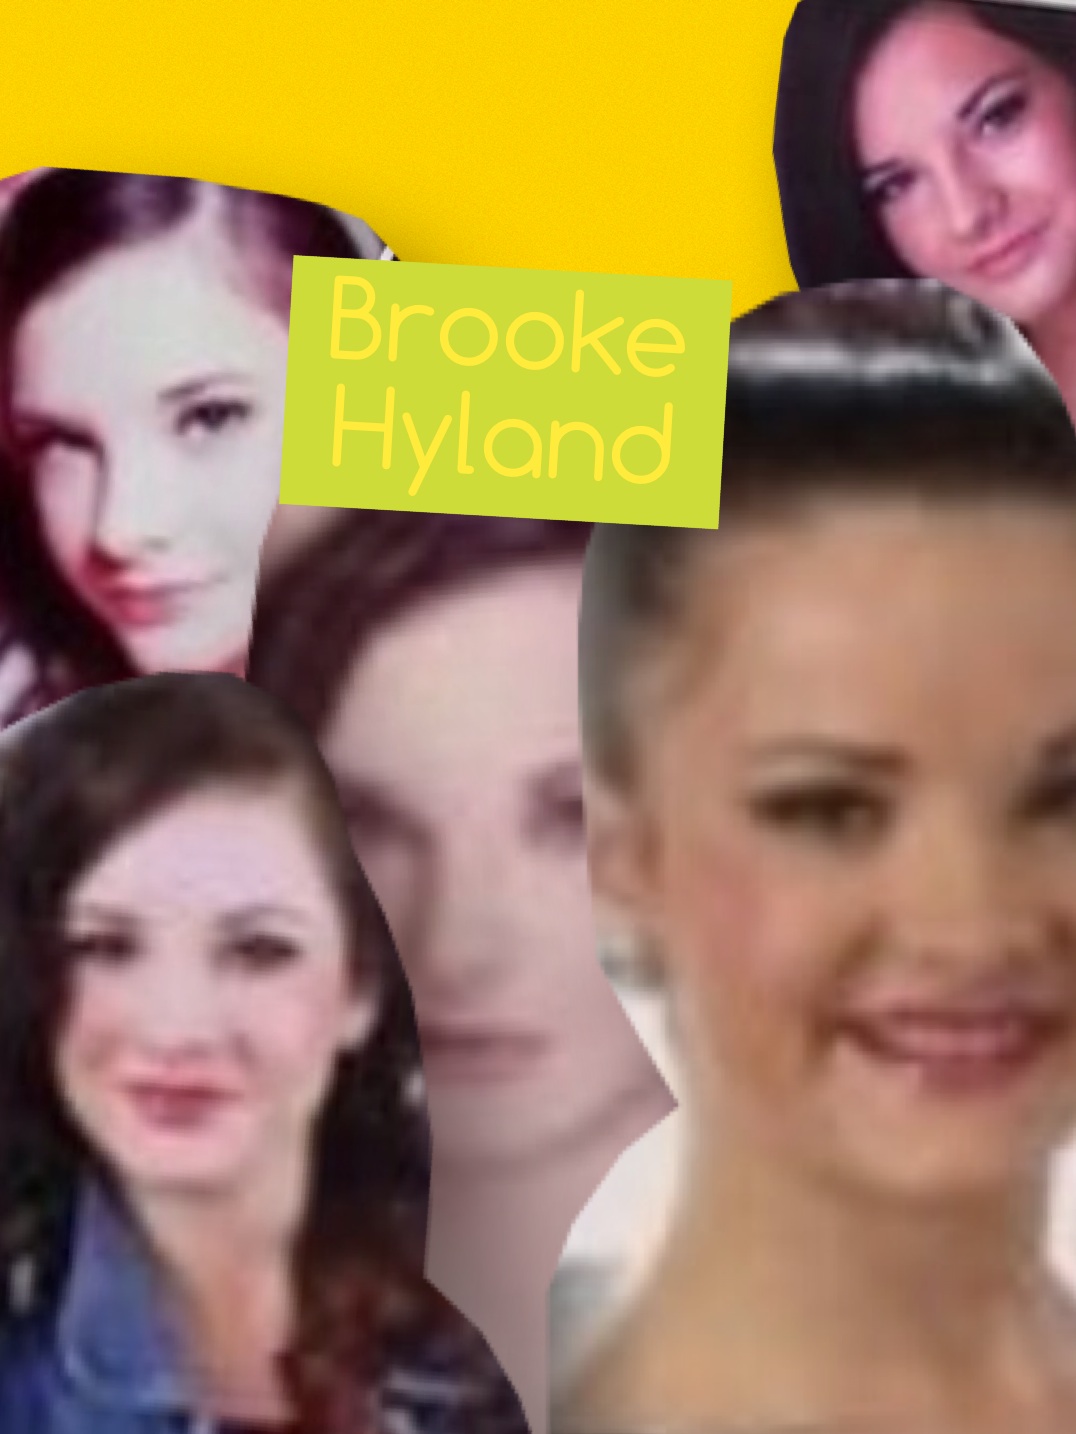 Brooke
Hyland